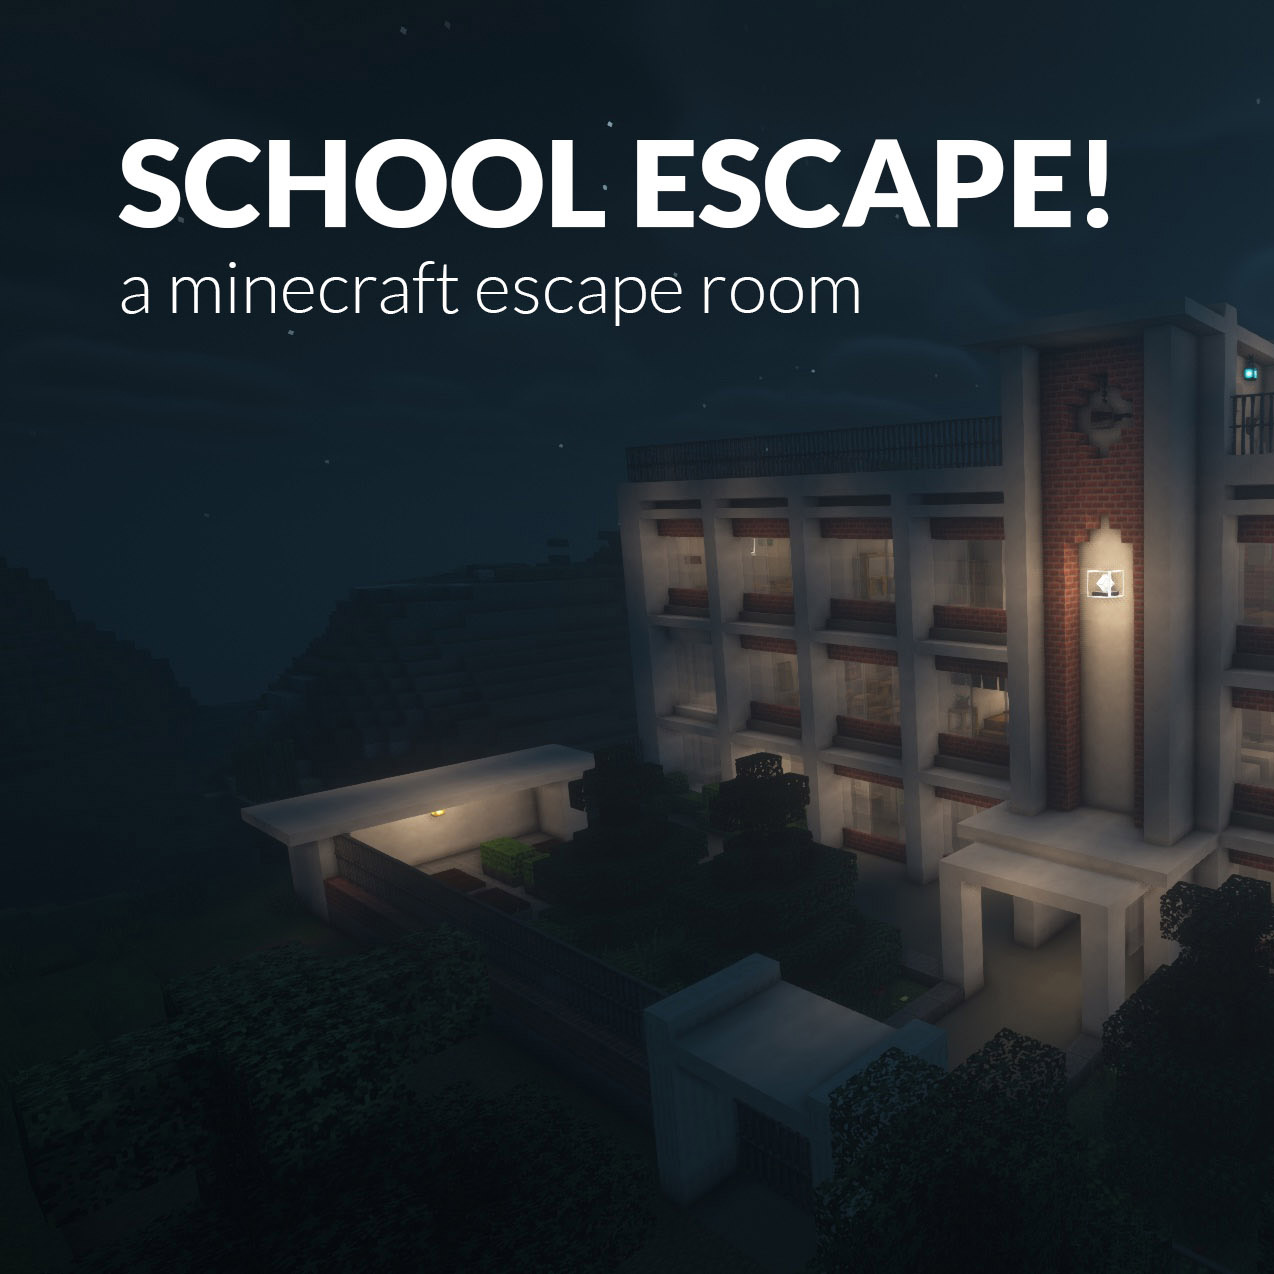 School Escape!